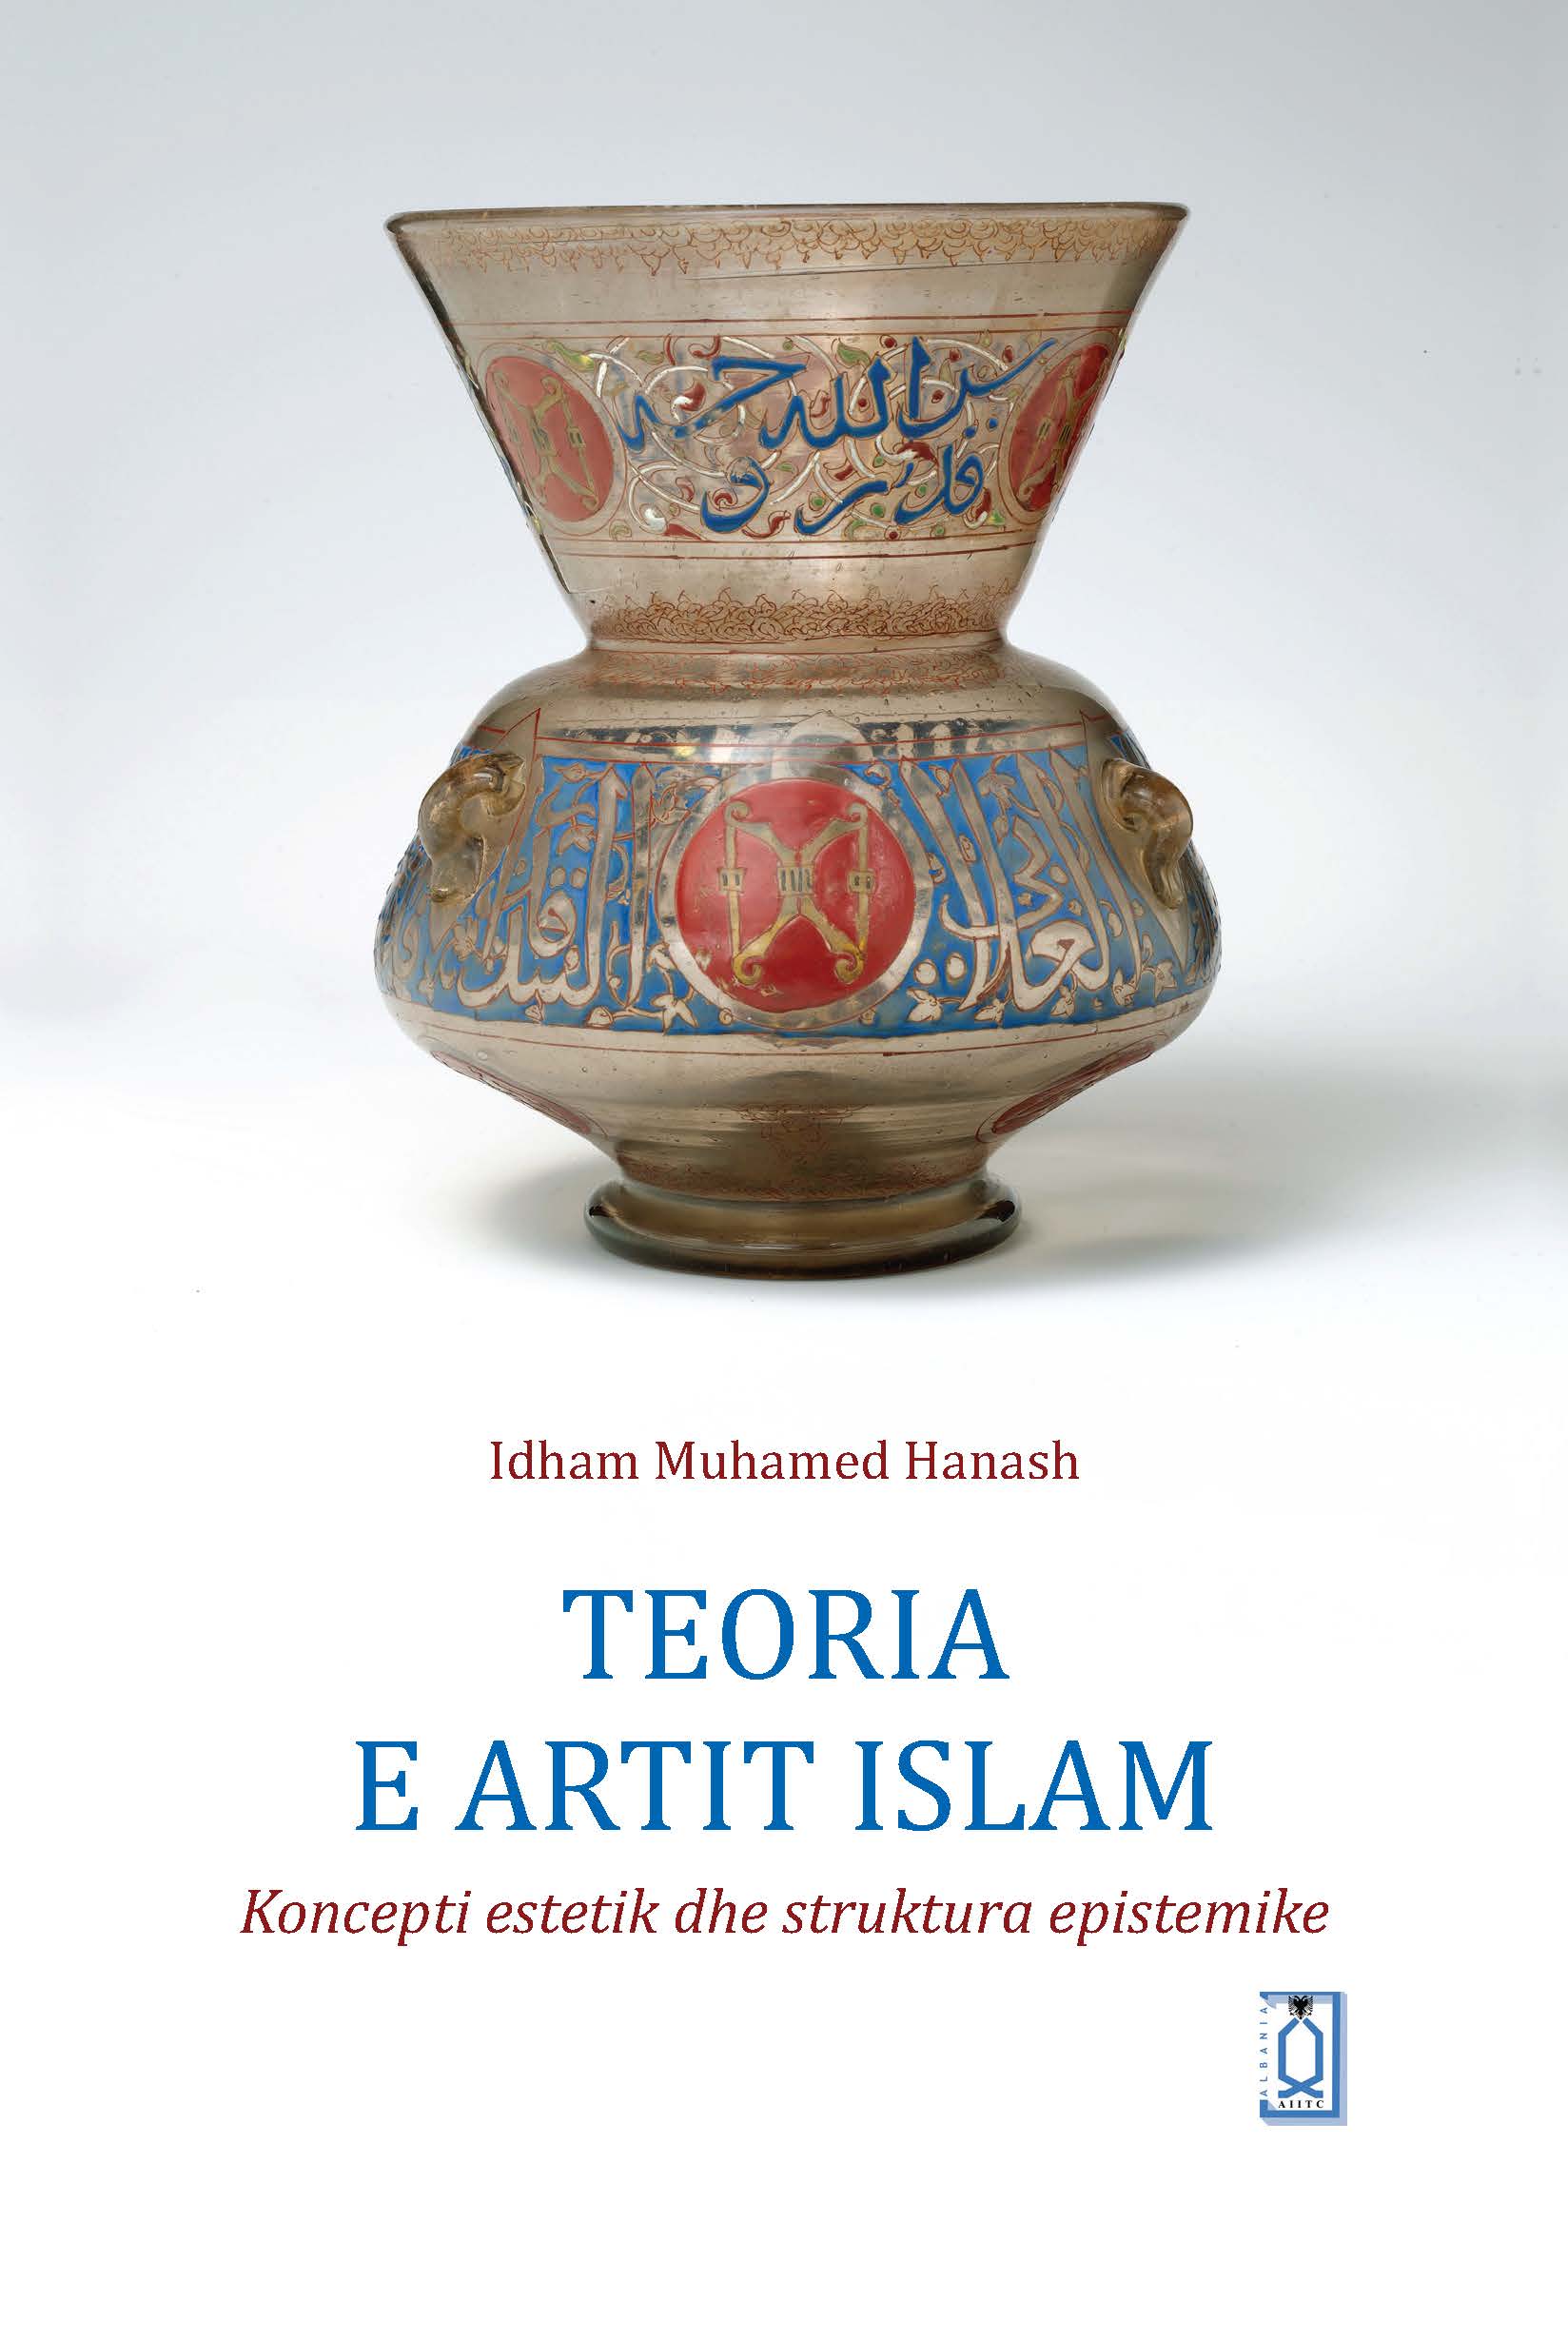 Albanian: Teoria e Artit Islam: Koncepti Estetik dhe Struktura Epistemike (The Theory of Islamic Art: Aesthetic Concept and Epistemic Structure)